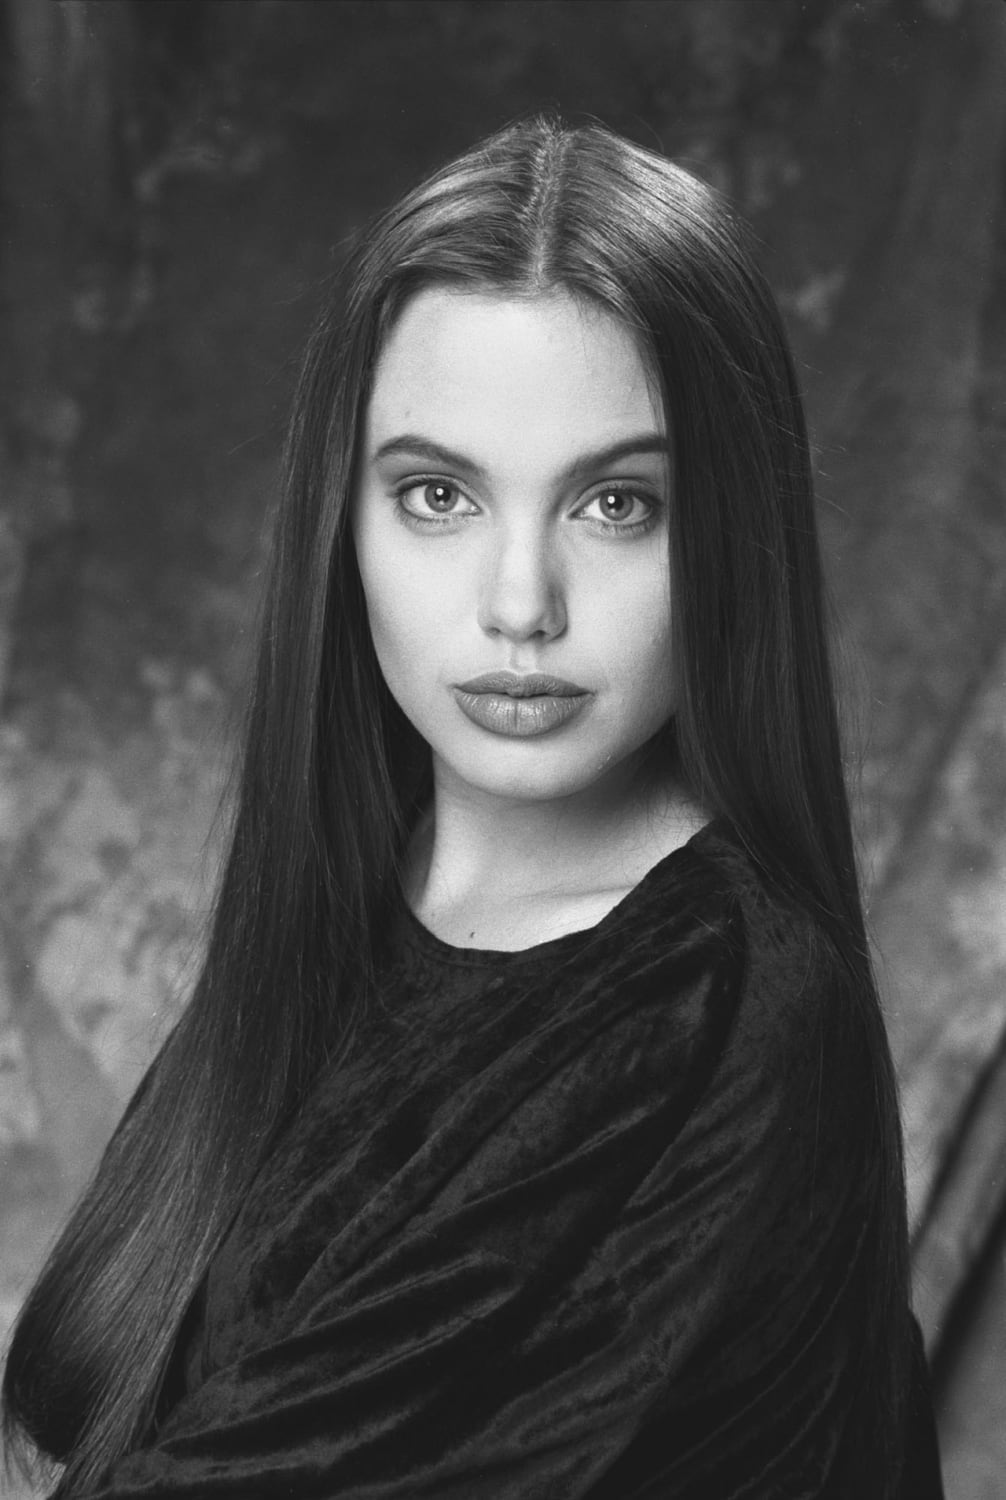 An 18 years old Angelina jolie (1993)